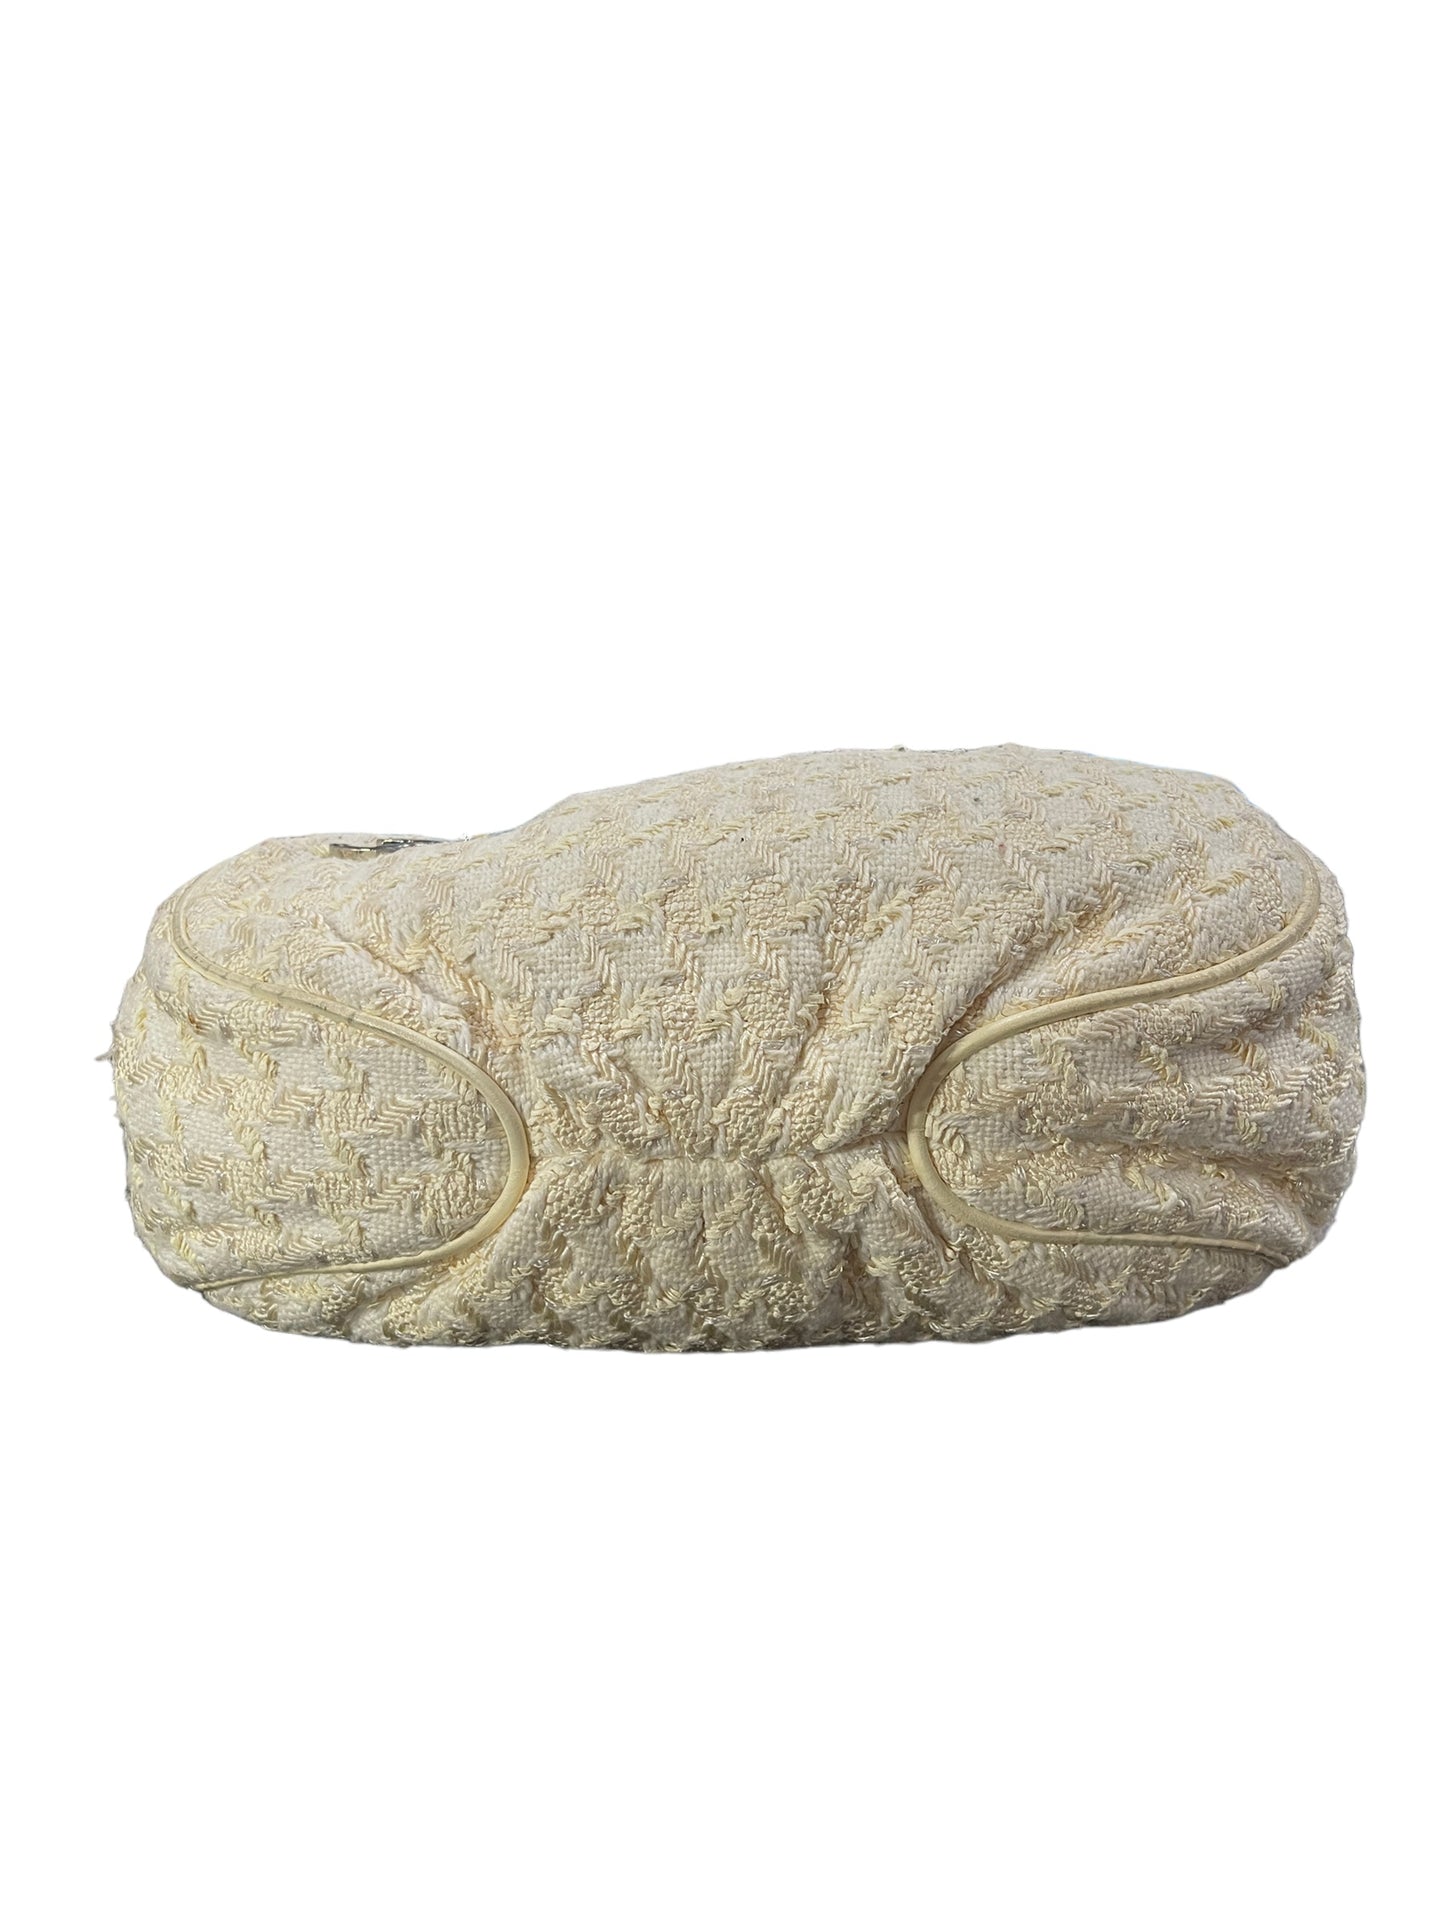 Chanel - Tweed Boucle Knitting Bag 0454060